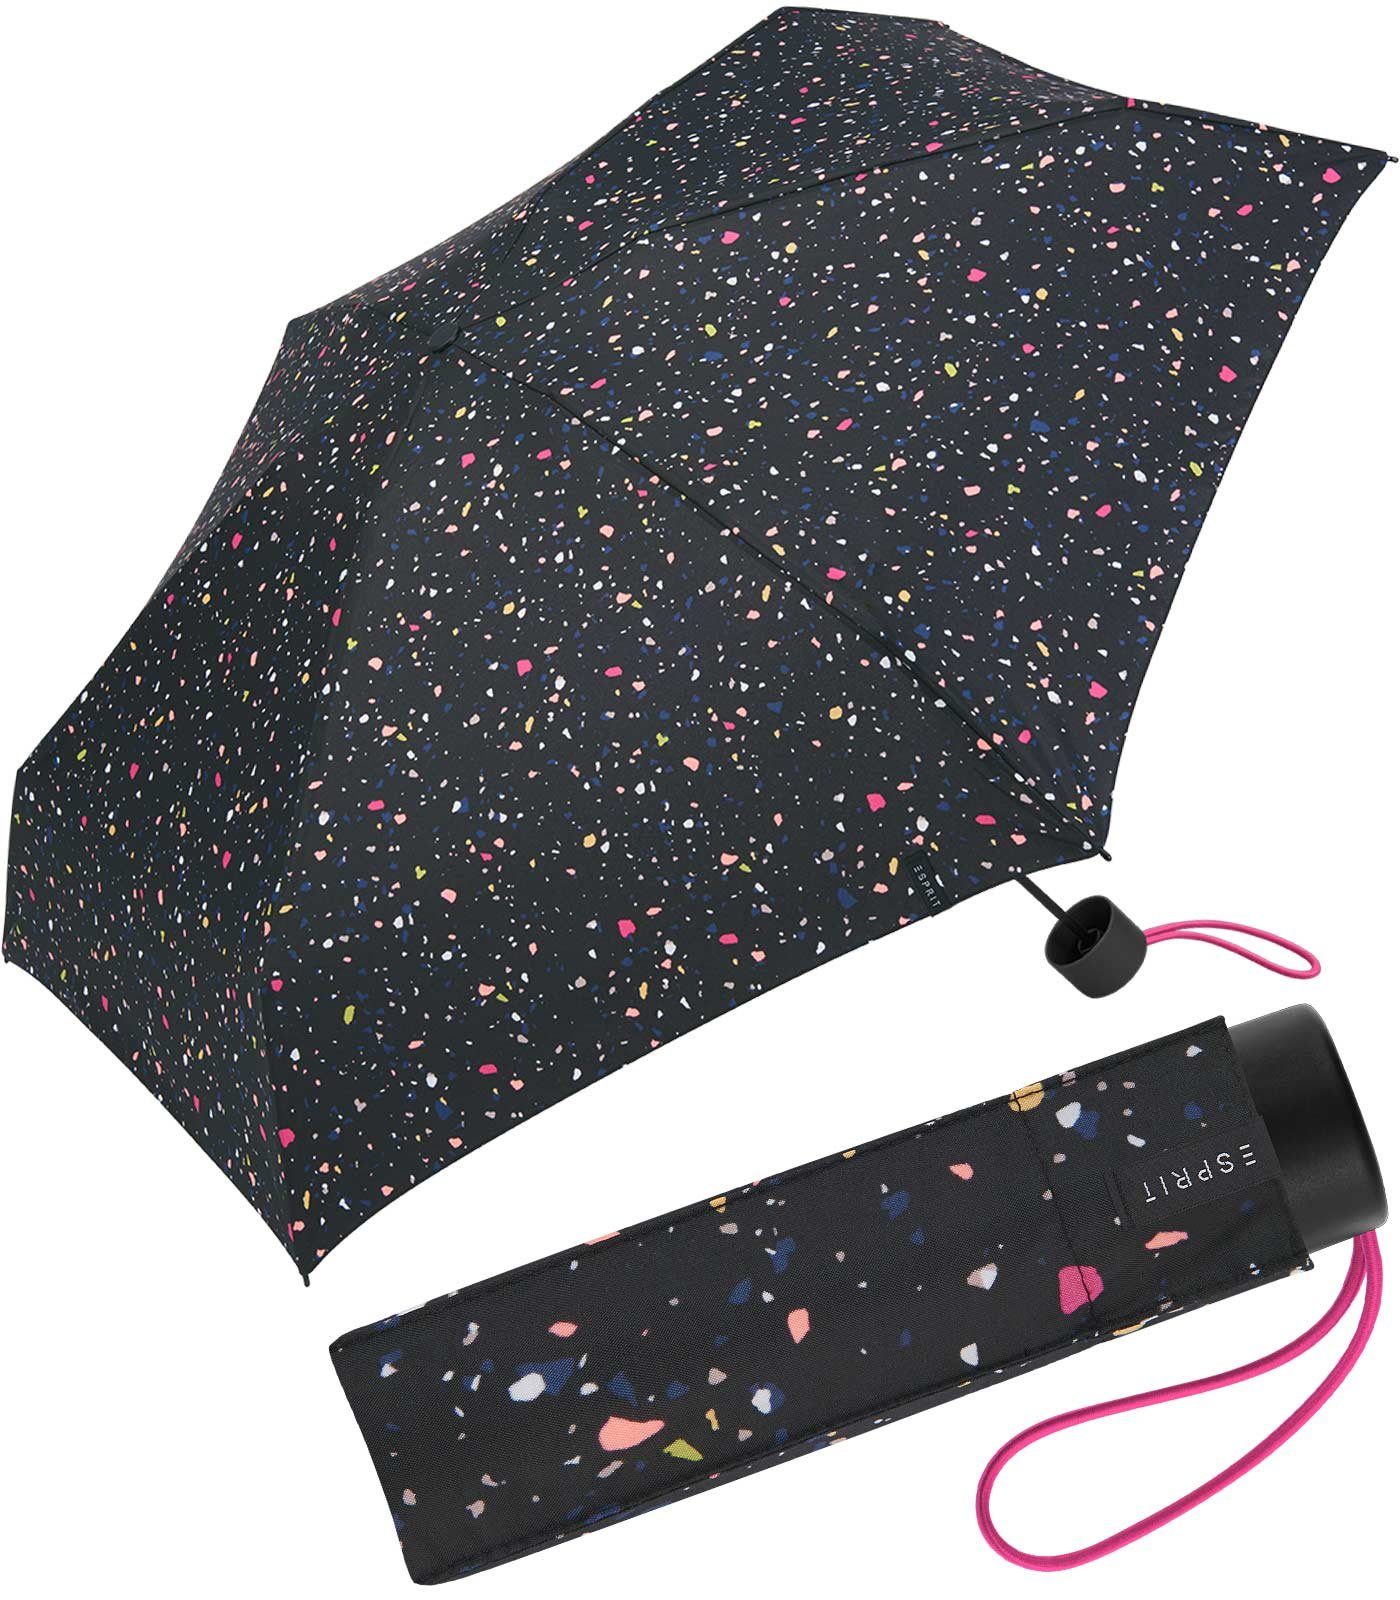 Esprit Taschenregenschirm Mini Regenschirm Petito - Terrazzo Dots - schwarz, winzig klein, in den neuen Trendfarben